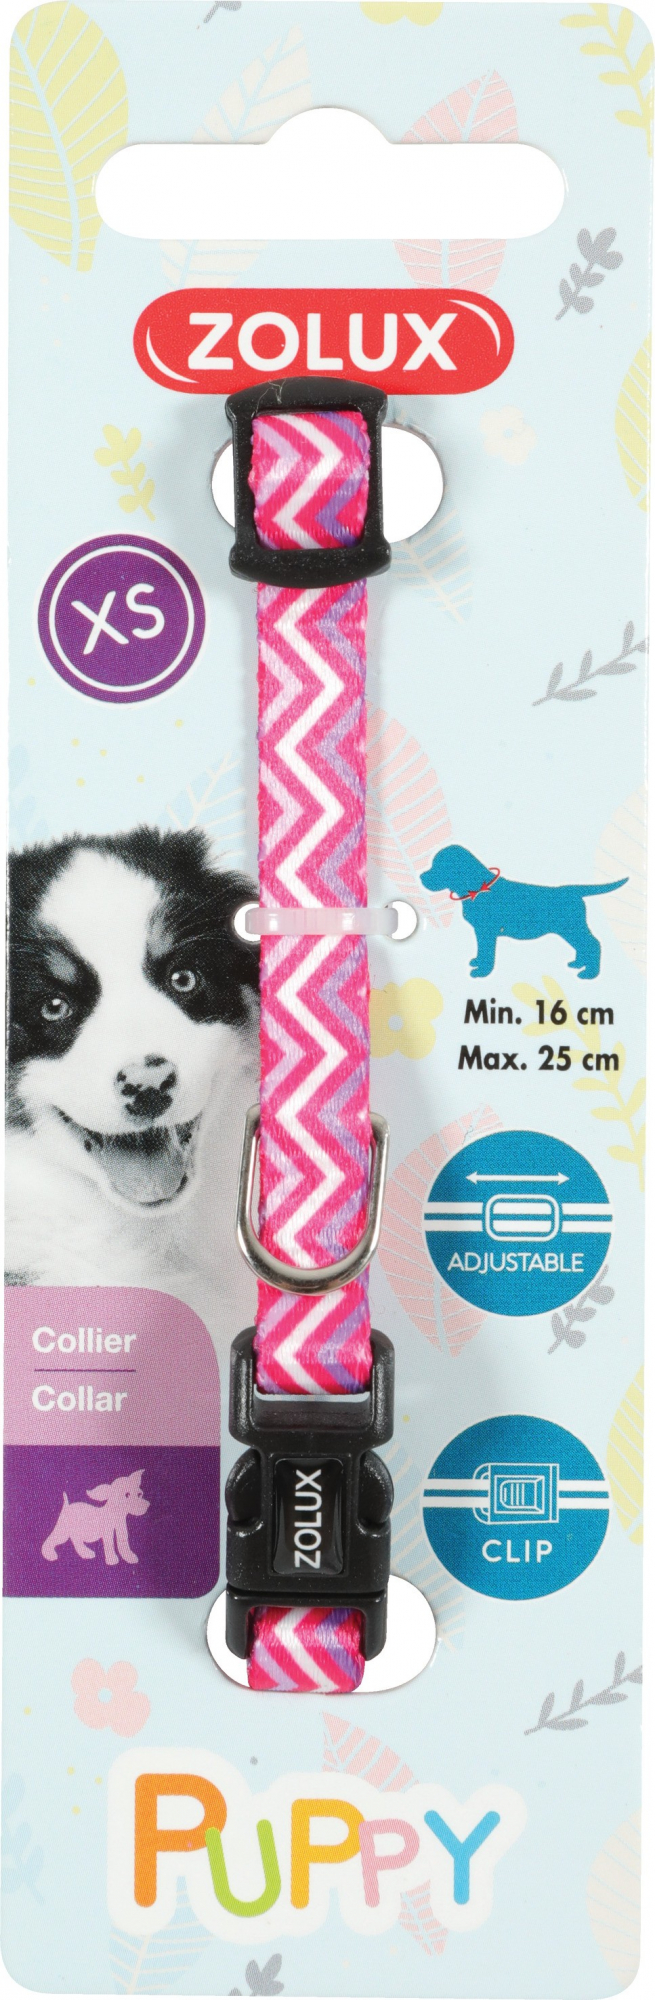 Collar de nylon ajustable para cachorros Puppy Pixie - rosa